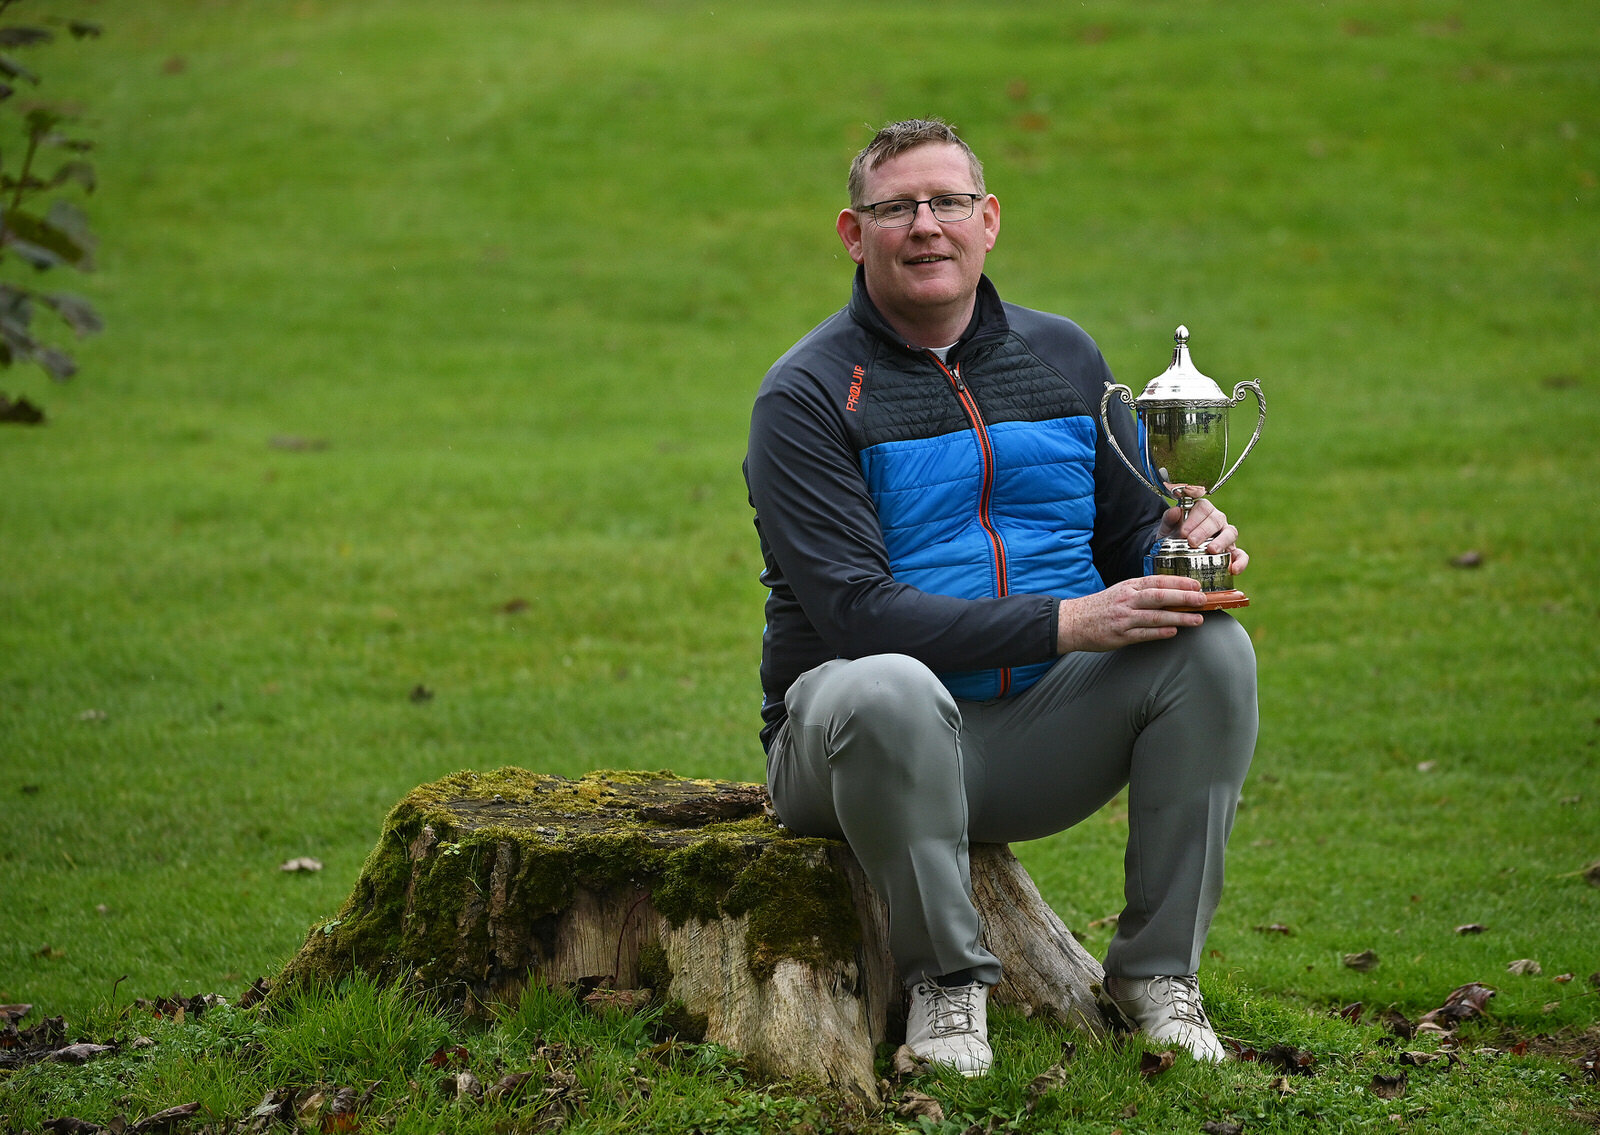 2020 Irish Mid Amateur Open Championship at Nenagh Golf Club